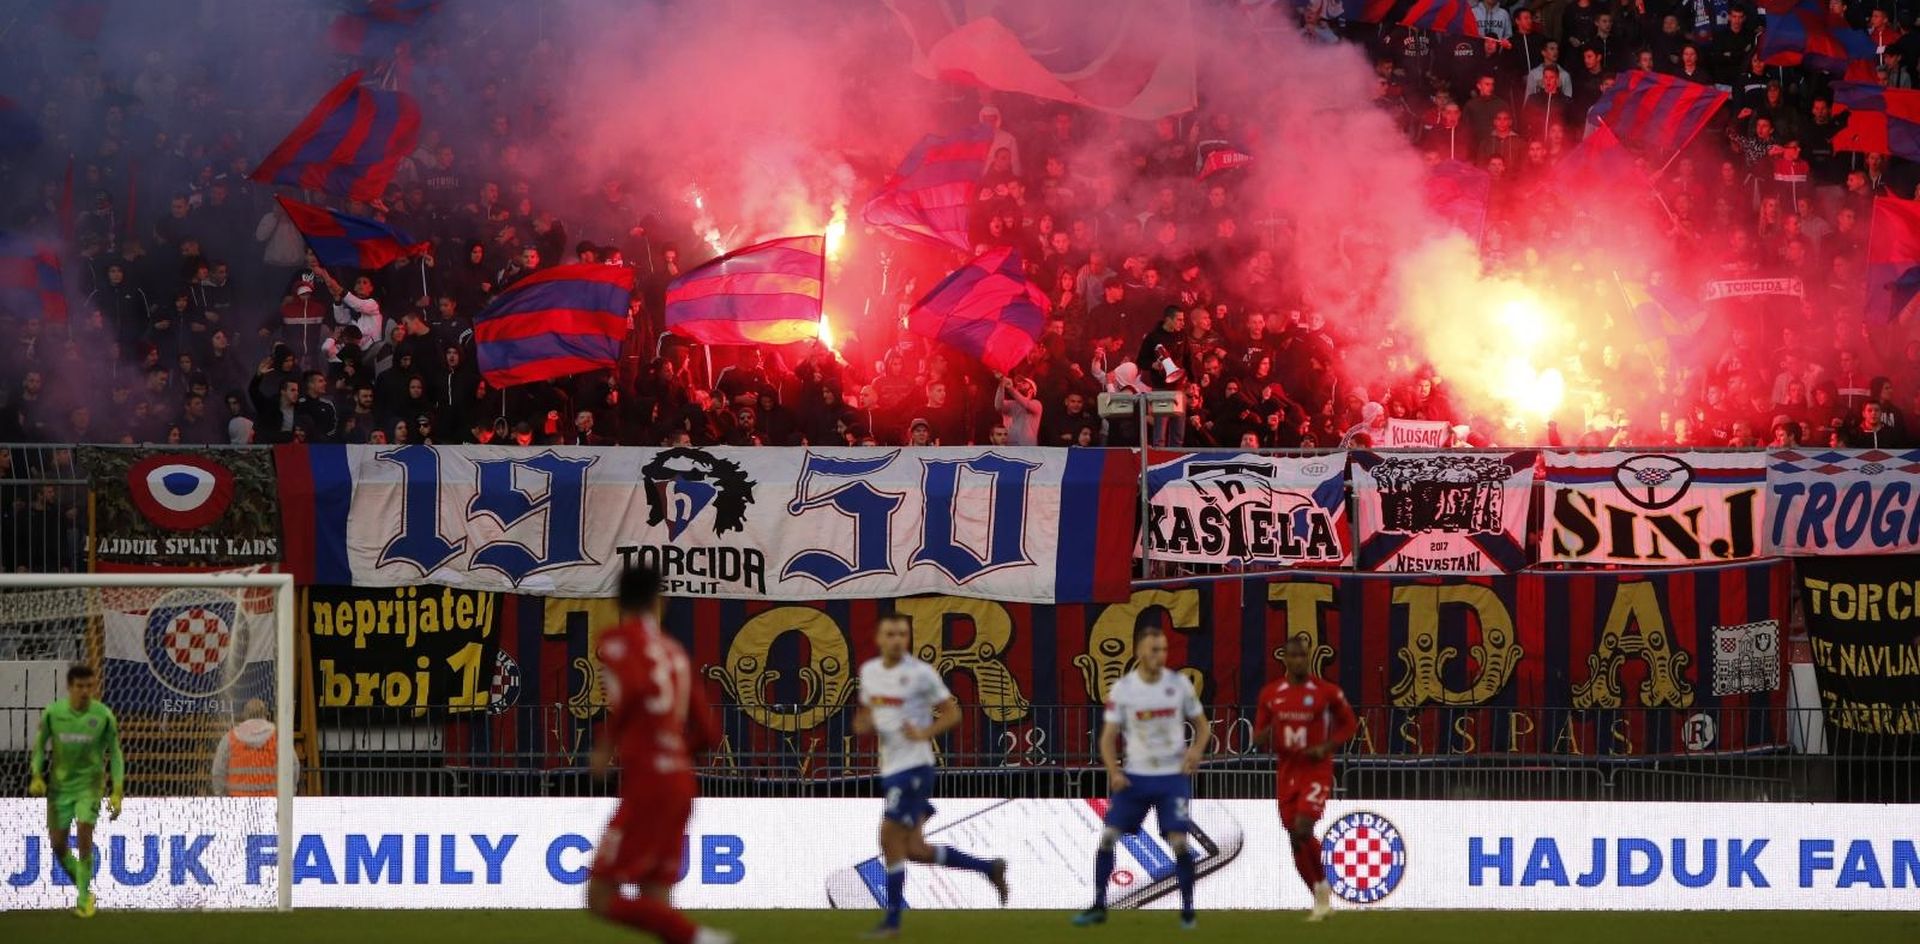 10.11.2019., stadion Poljud, Split - Hrvatski Telekom Prva liga, 15. kolo, HNK Hajduk - NK Osijek. Photo: Milan Sabic/PIXSELL